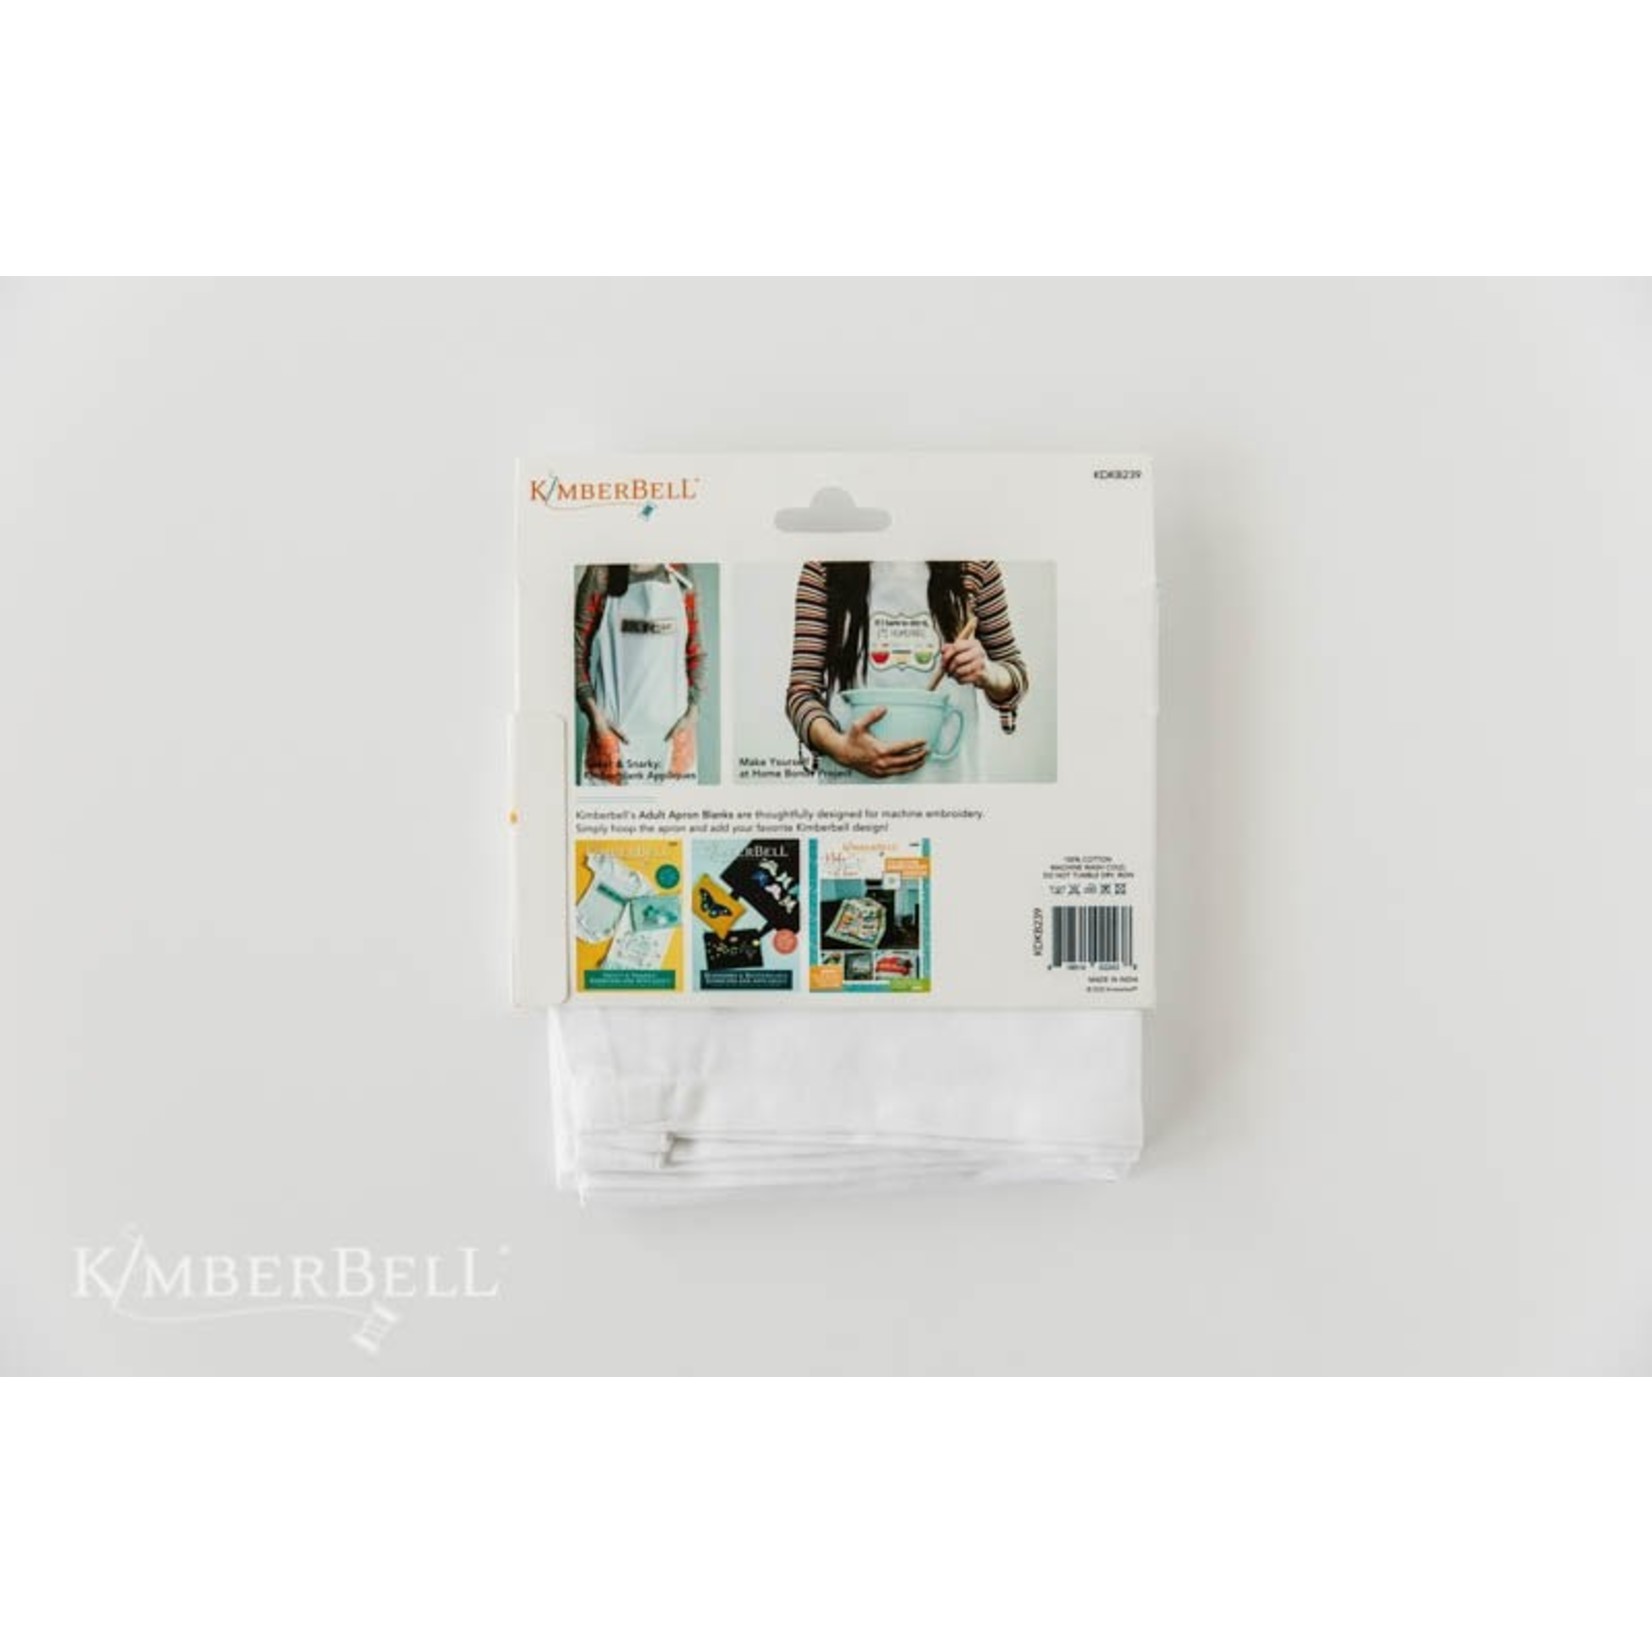 Kimberbell Designs Adult Apron, White, Adjustable Neck